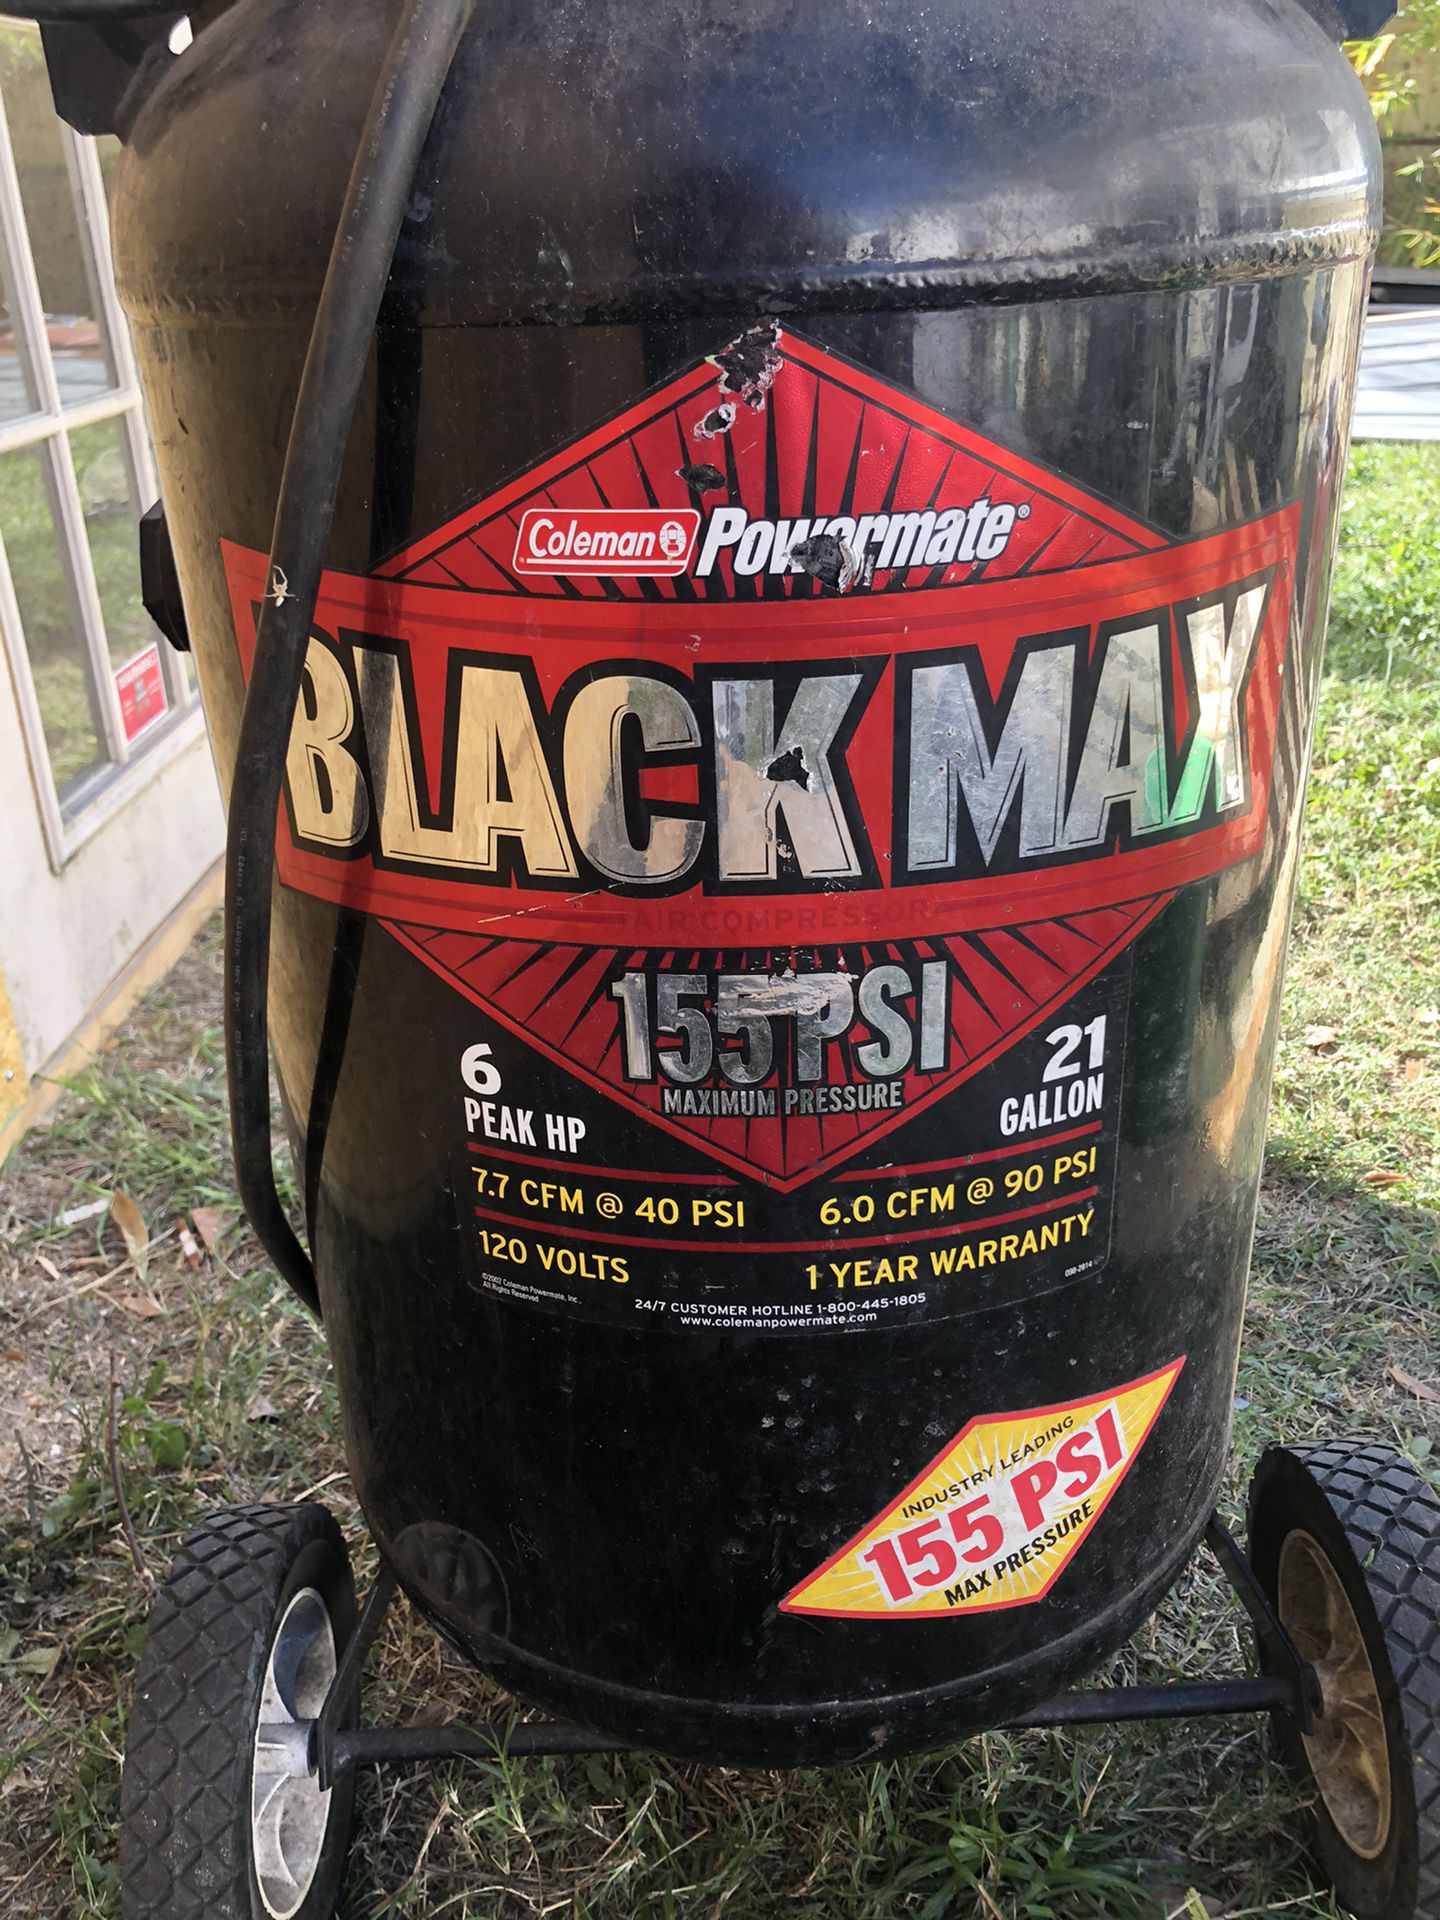 Black man compressor 155 PSI